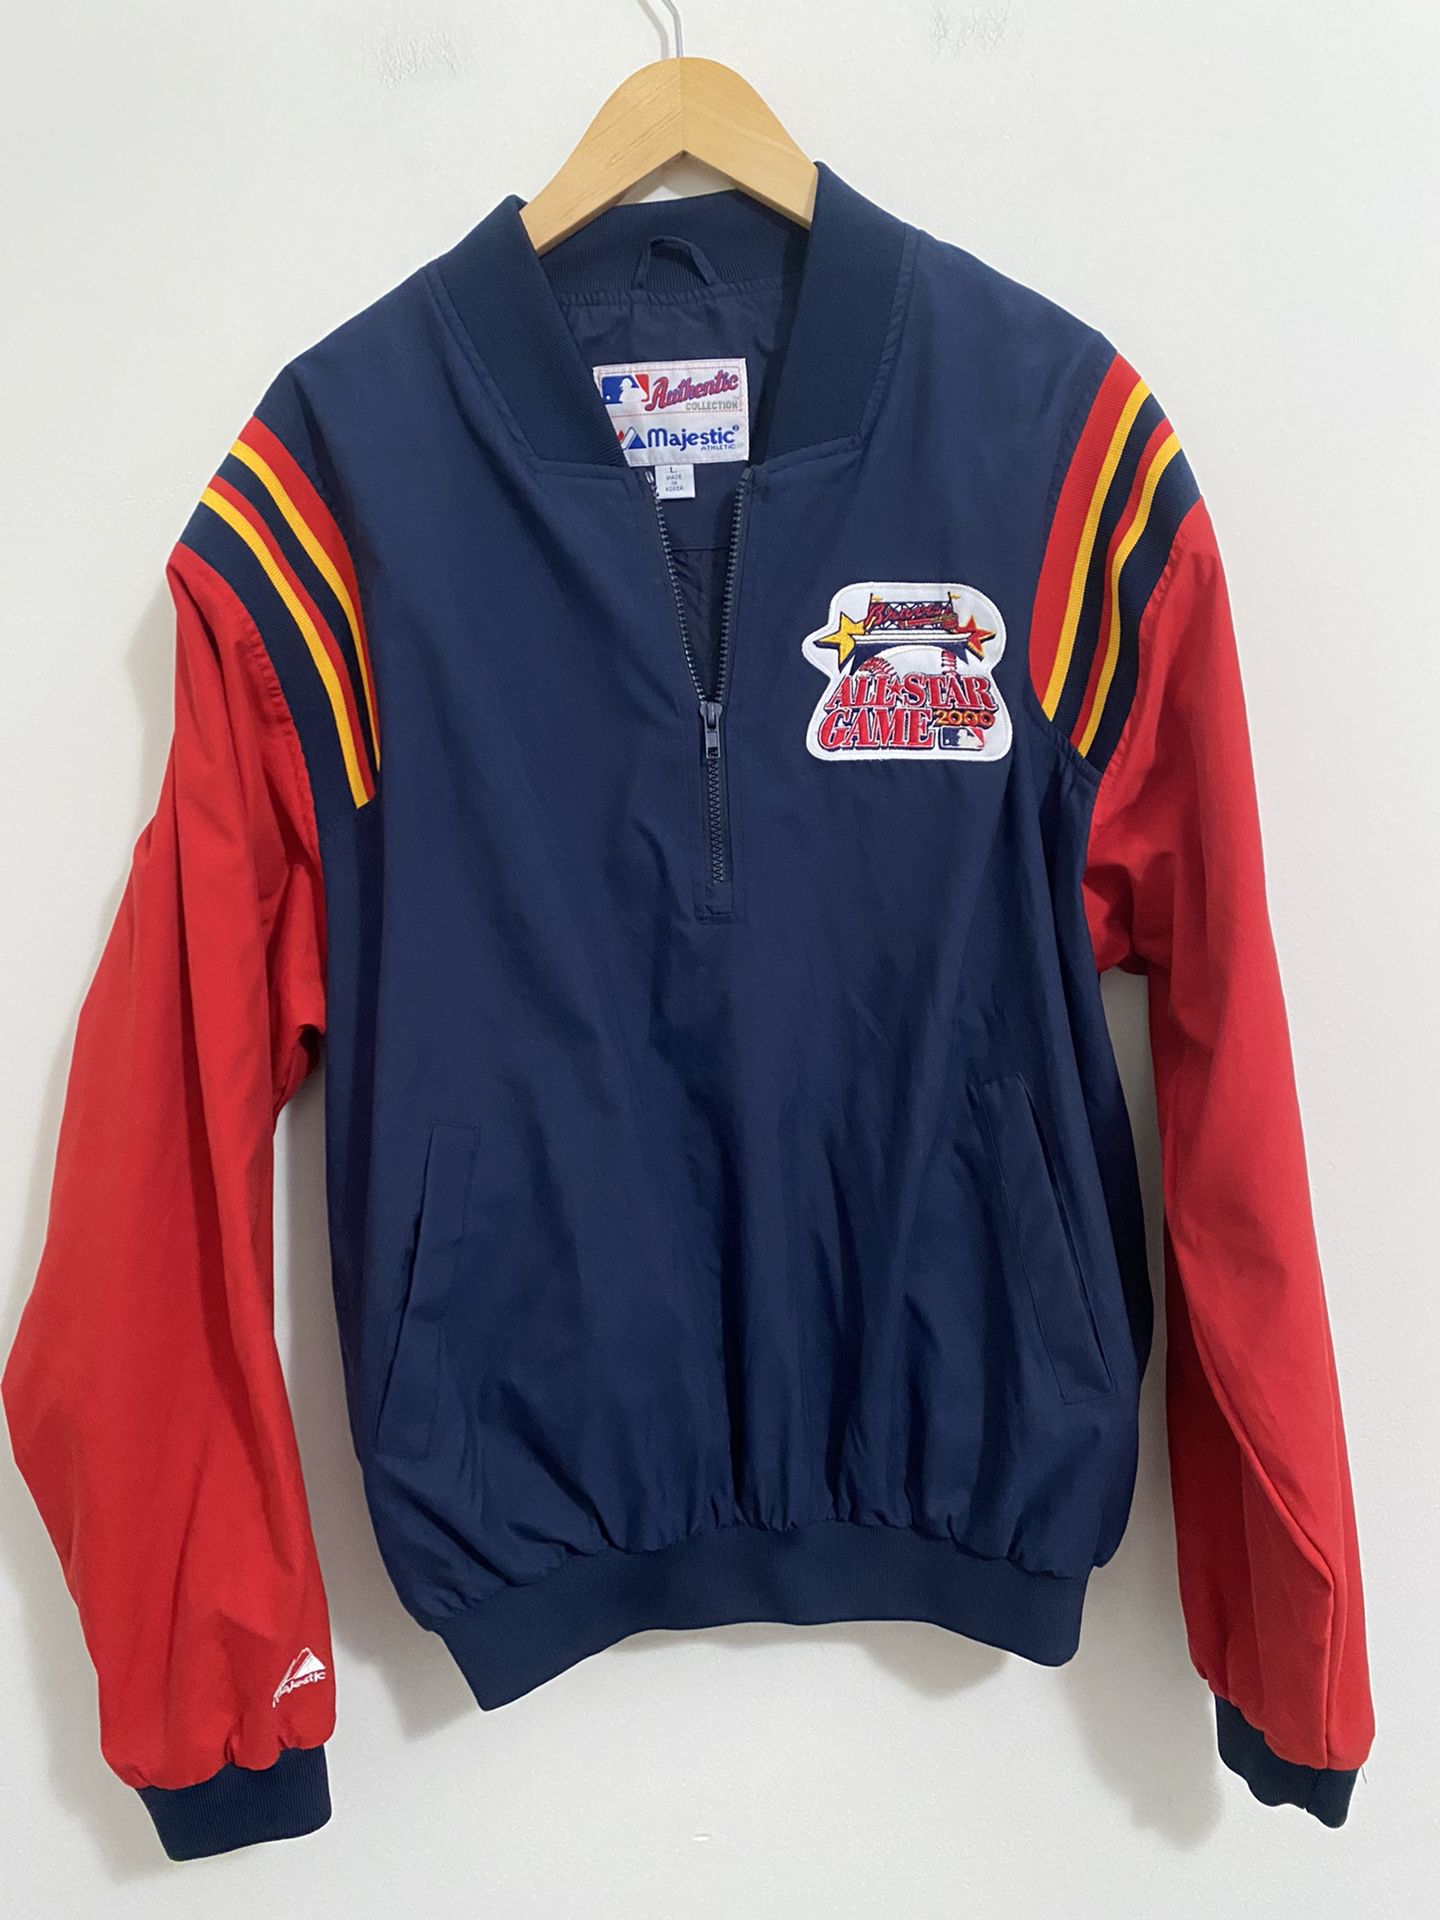 Vintage Atlanta Braves Jacket by Majestic